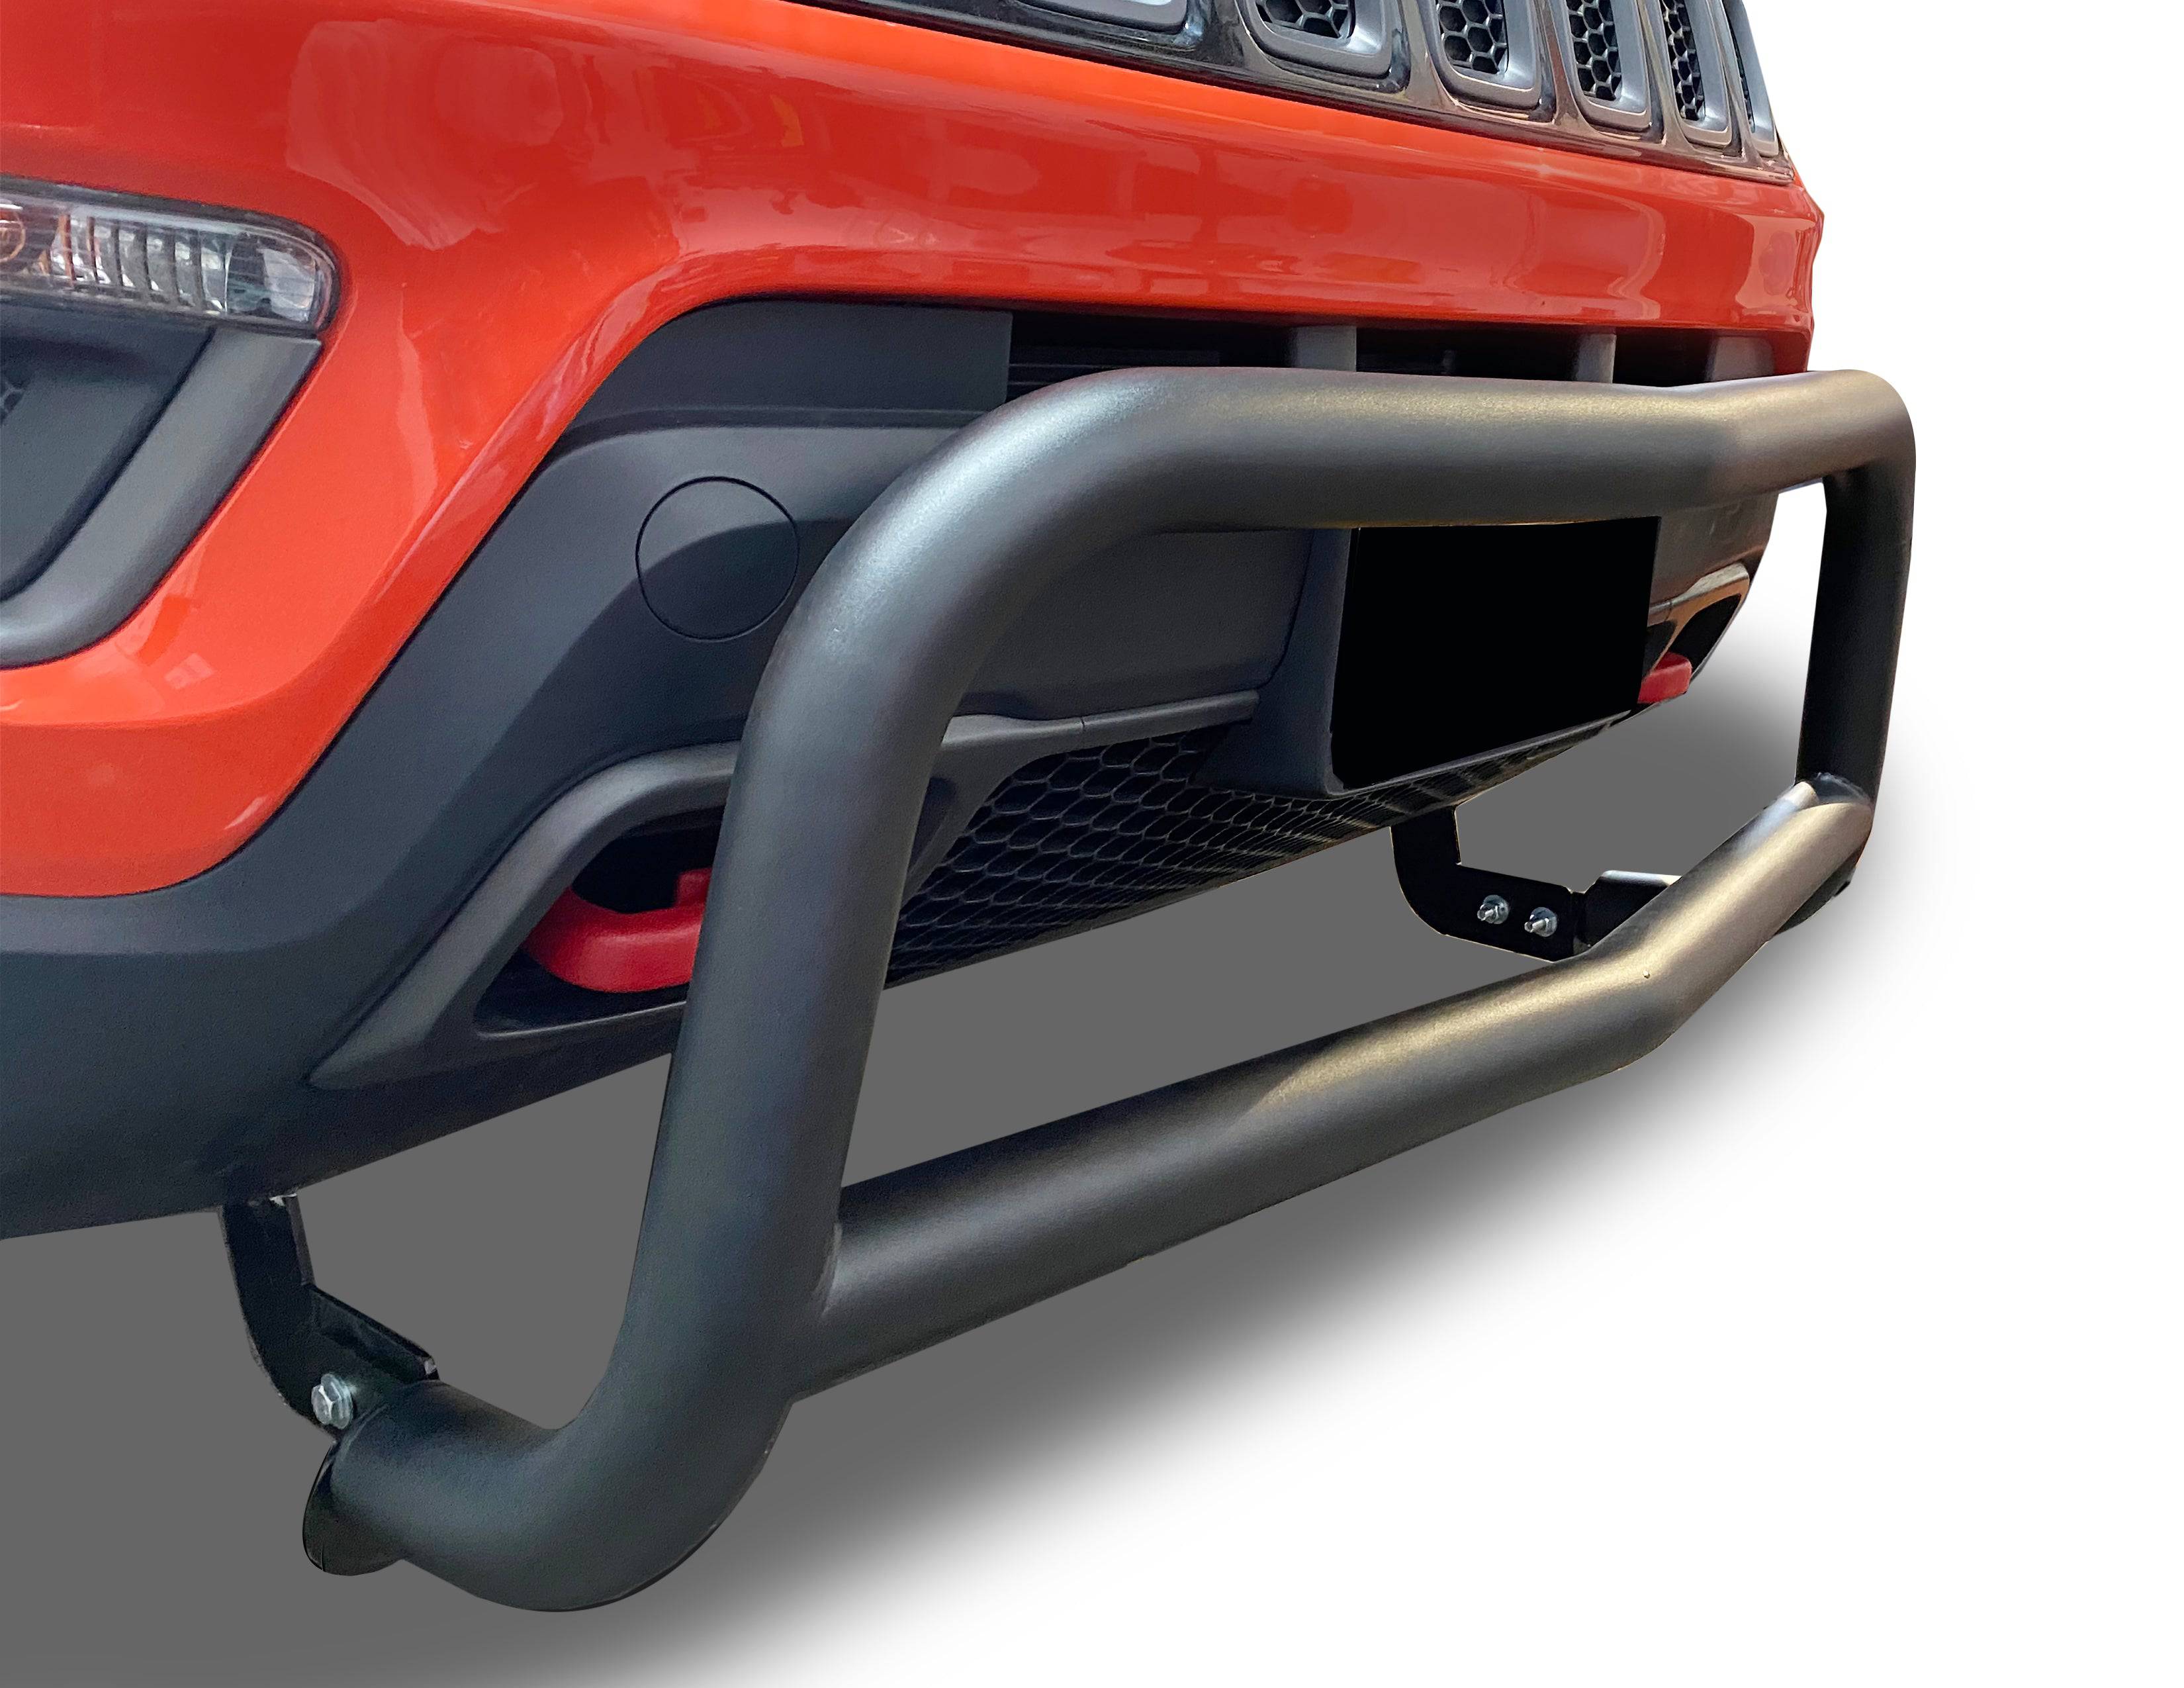 Front A-Bar / Nudge Bar (DC6) Bumper Guard fits Jeep Compass - TRAILHAWK Edition - Broadfeet